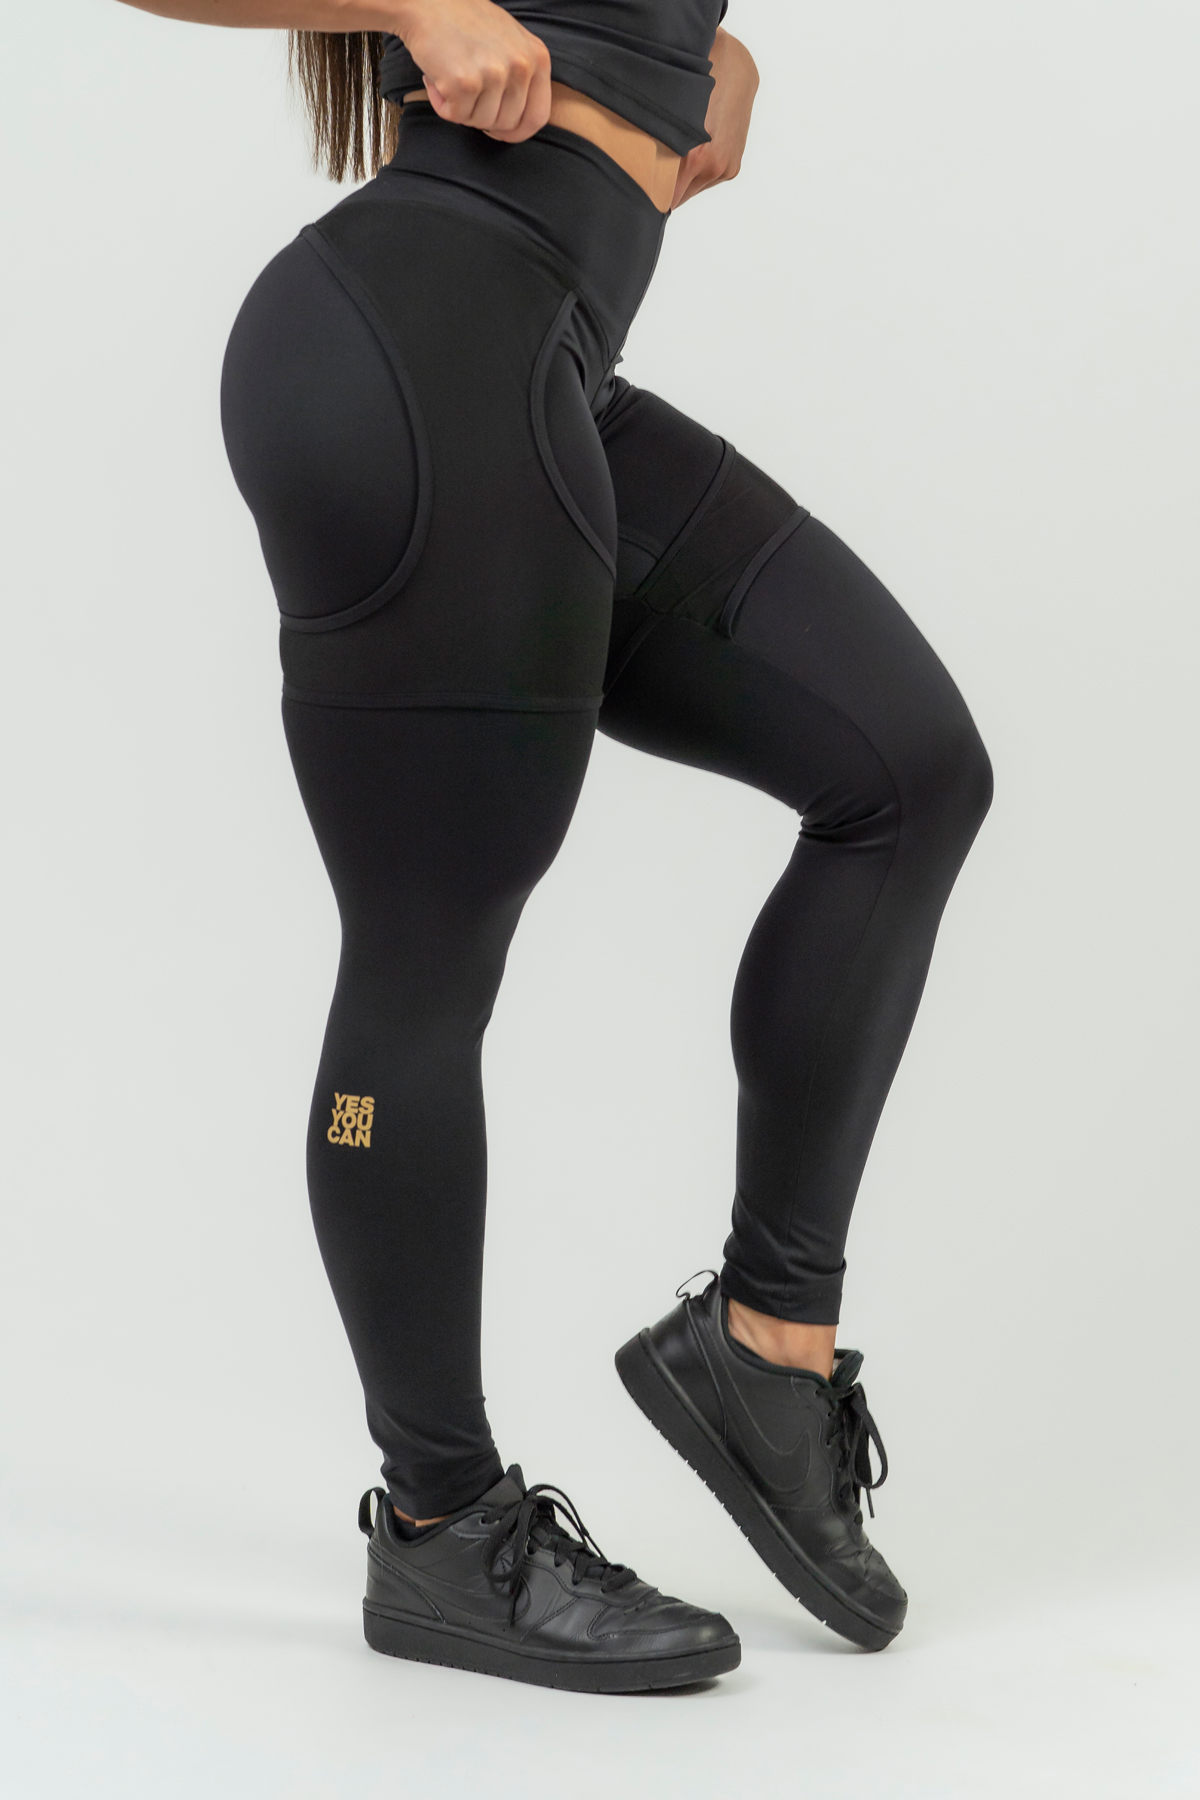 NEBBIA Women's Workout Jumpsuit INTENSE Focus